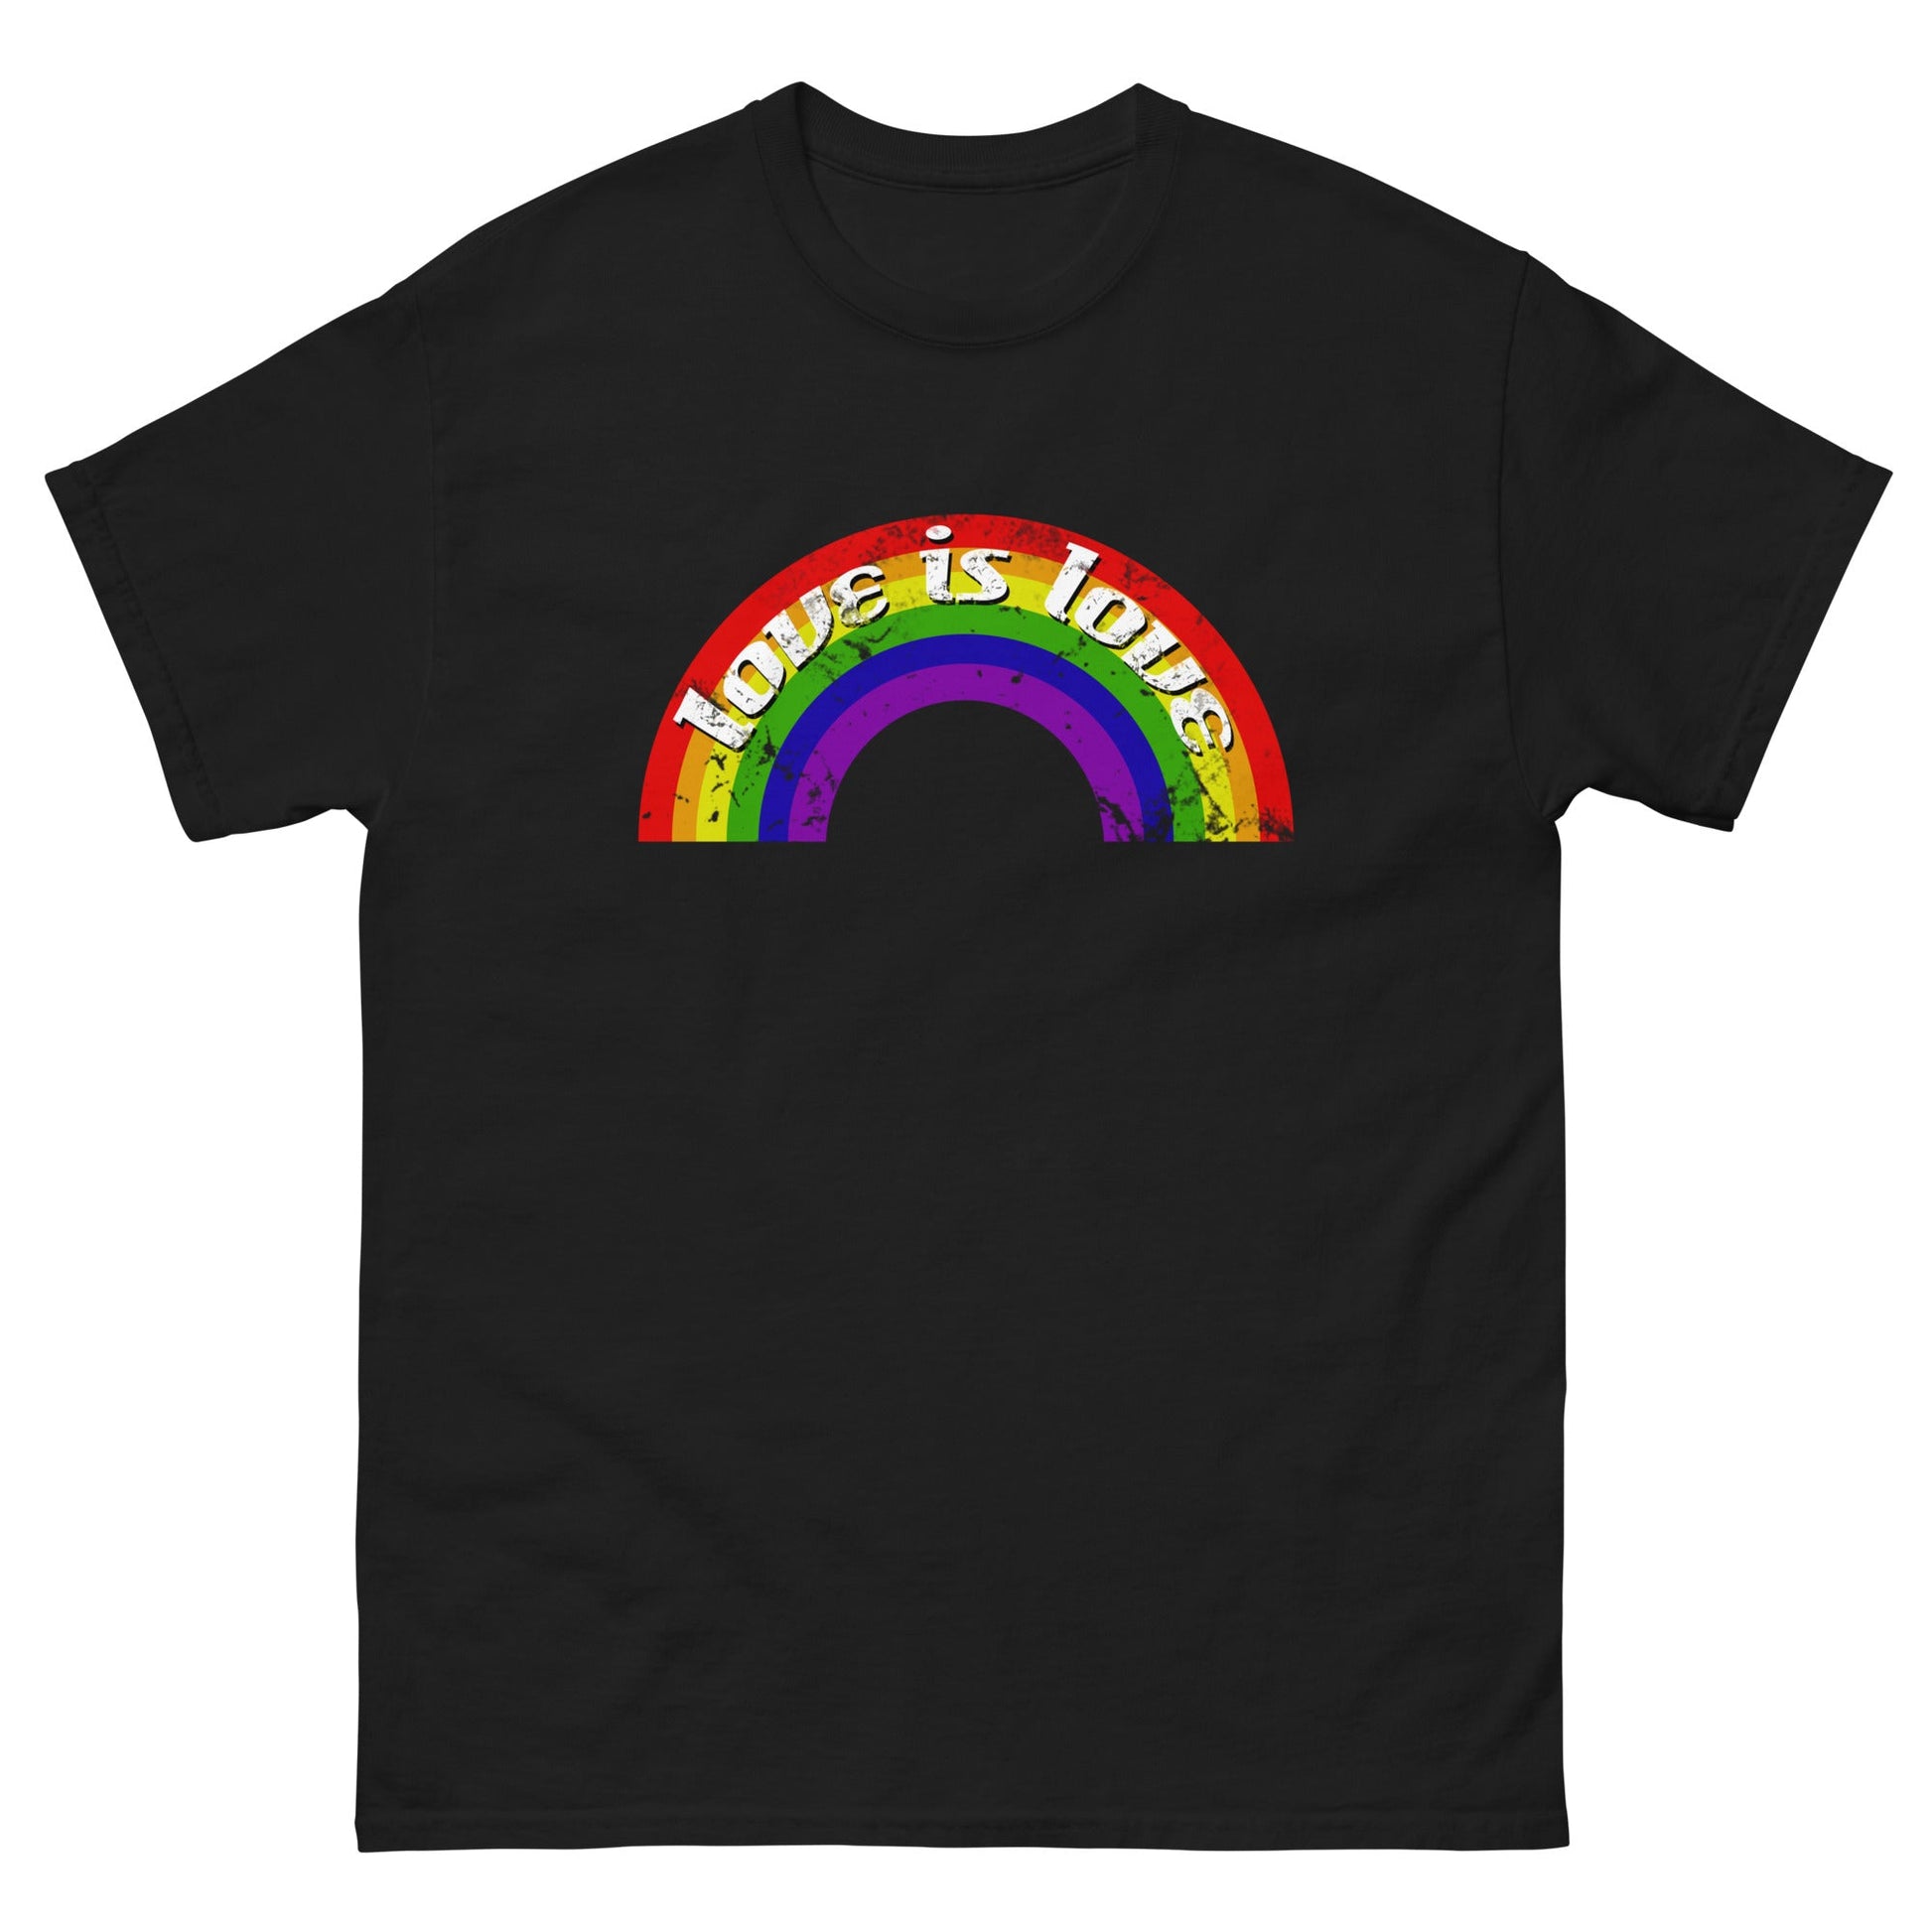 Scar Design T shirt Black / S Vintage LGBT Rainbow Love Is Love T-shirt